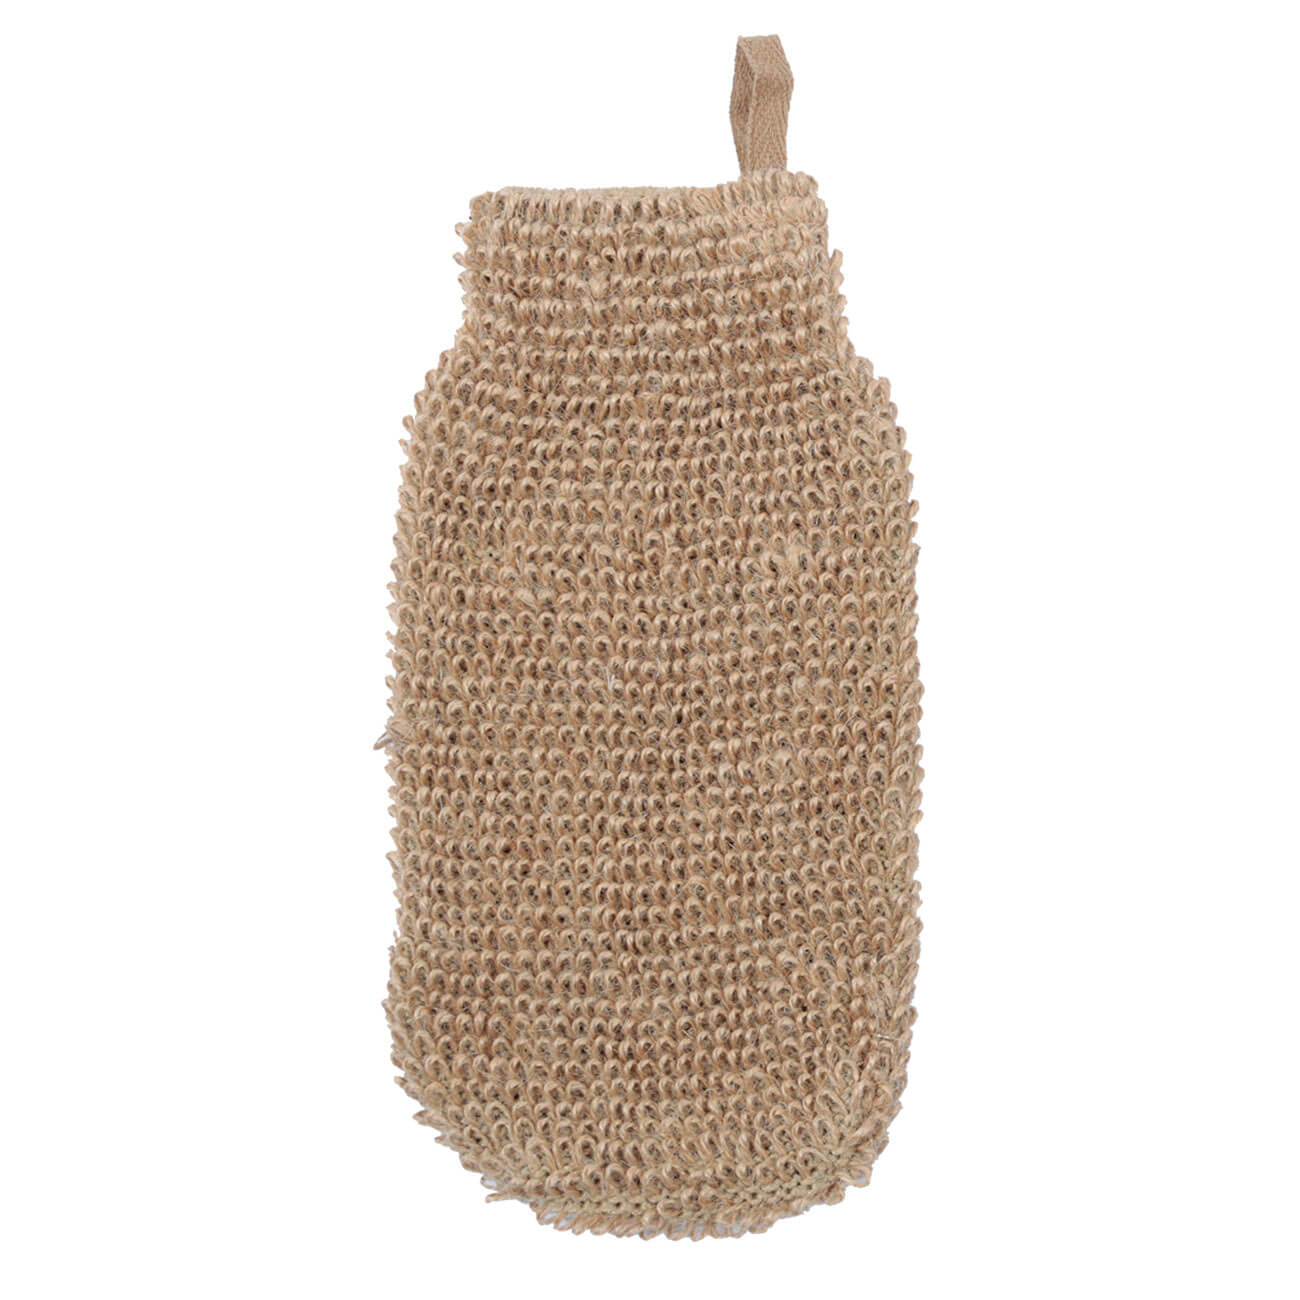 Мочалка-варежка для мытья тела, 10,5х21,5 см, конопляное волокно, бежевая, Eco life мочалка для мытья тела 12х17 см с держателем бамбук хлопок серо бежевая bamboo spa